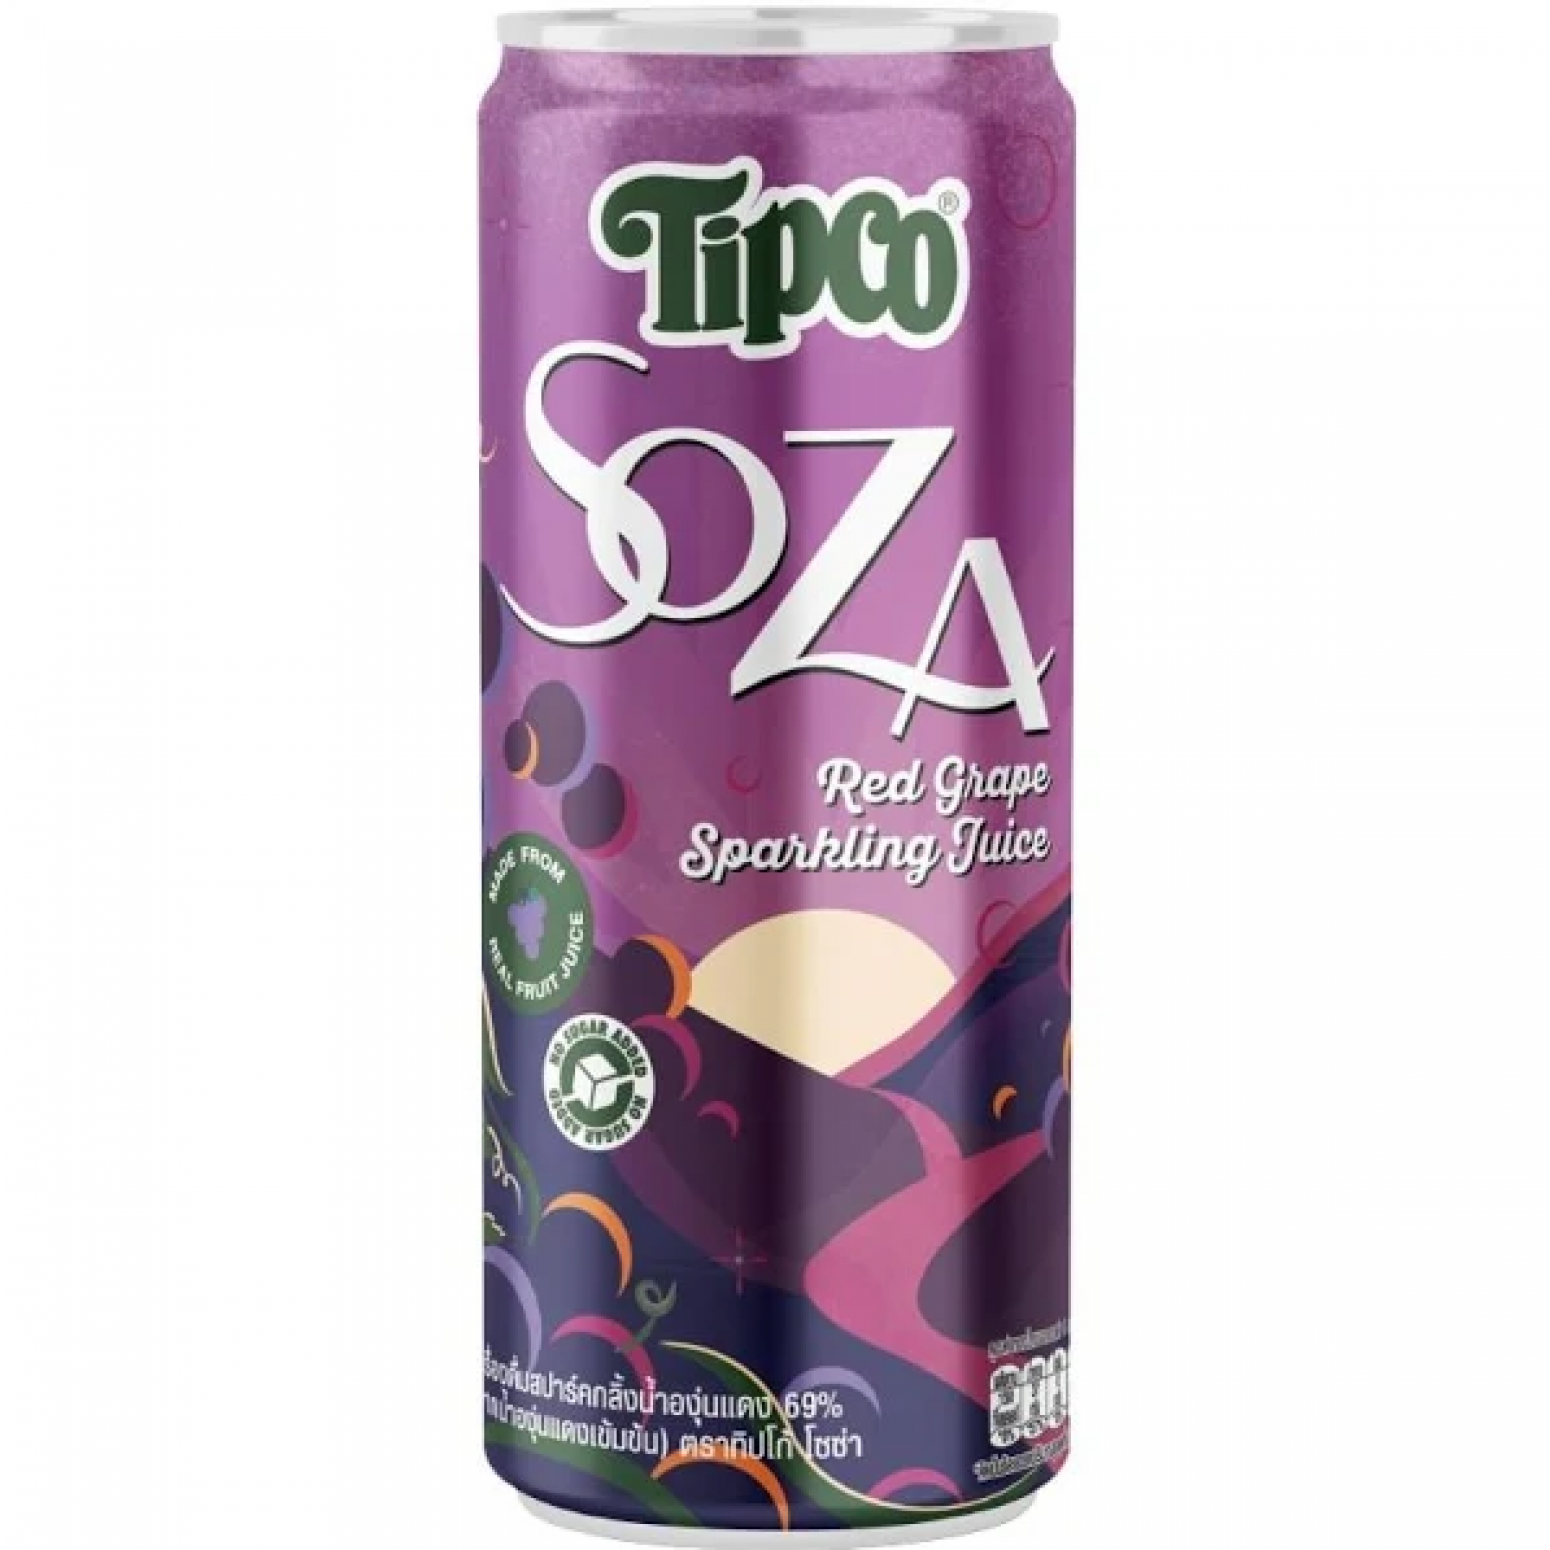 Tipco Soza Sparkling Juice Red Grape 330ml.